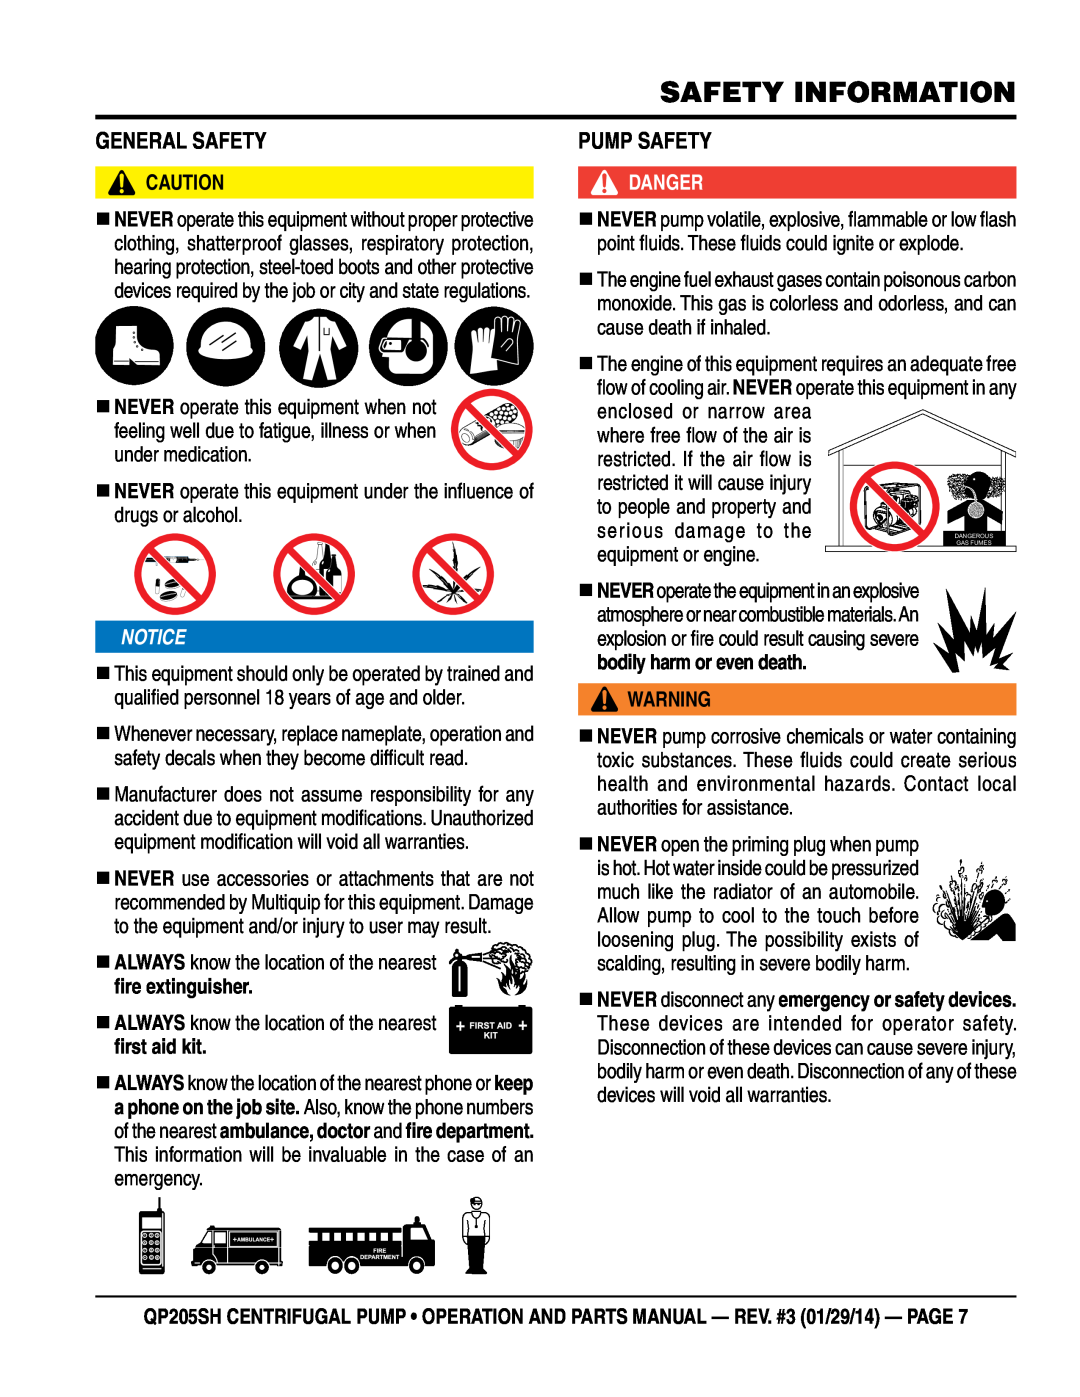 Honda Power Equipment QP205SH manual General Safety, Pump Safety, Safety Information, Danger 